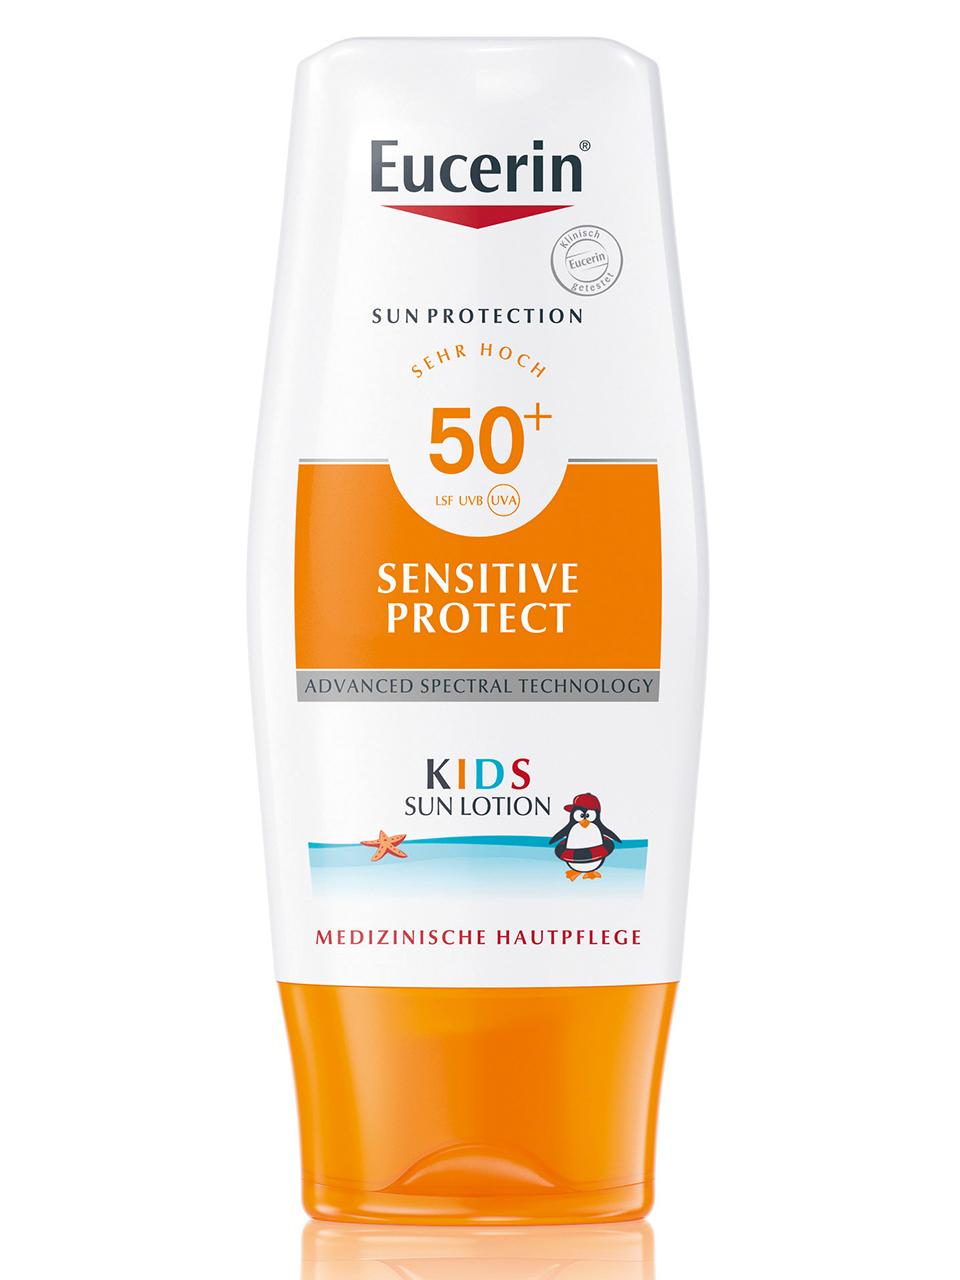 Eucerin KIDS Sun Lotion LSF 50+